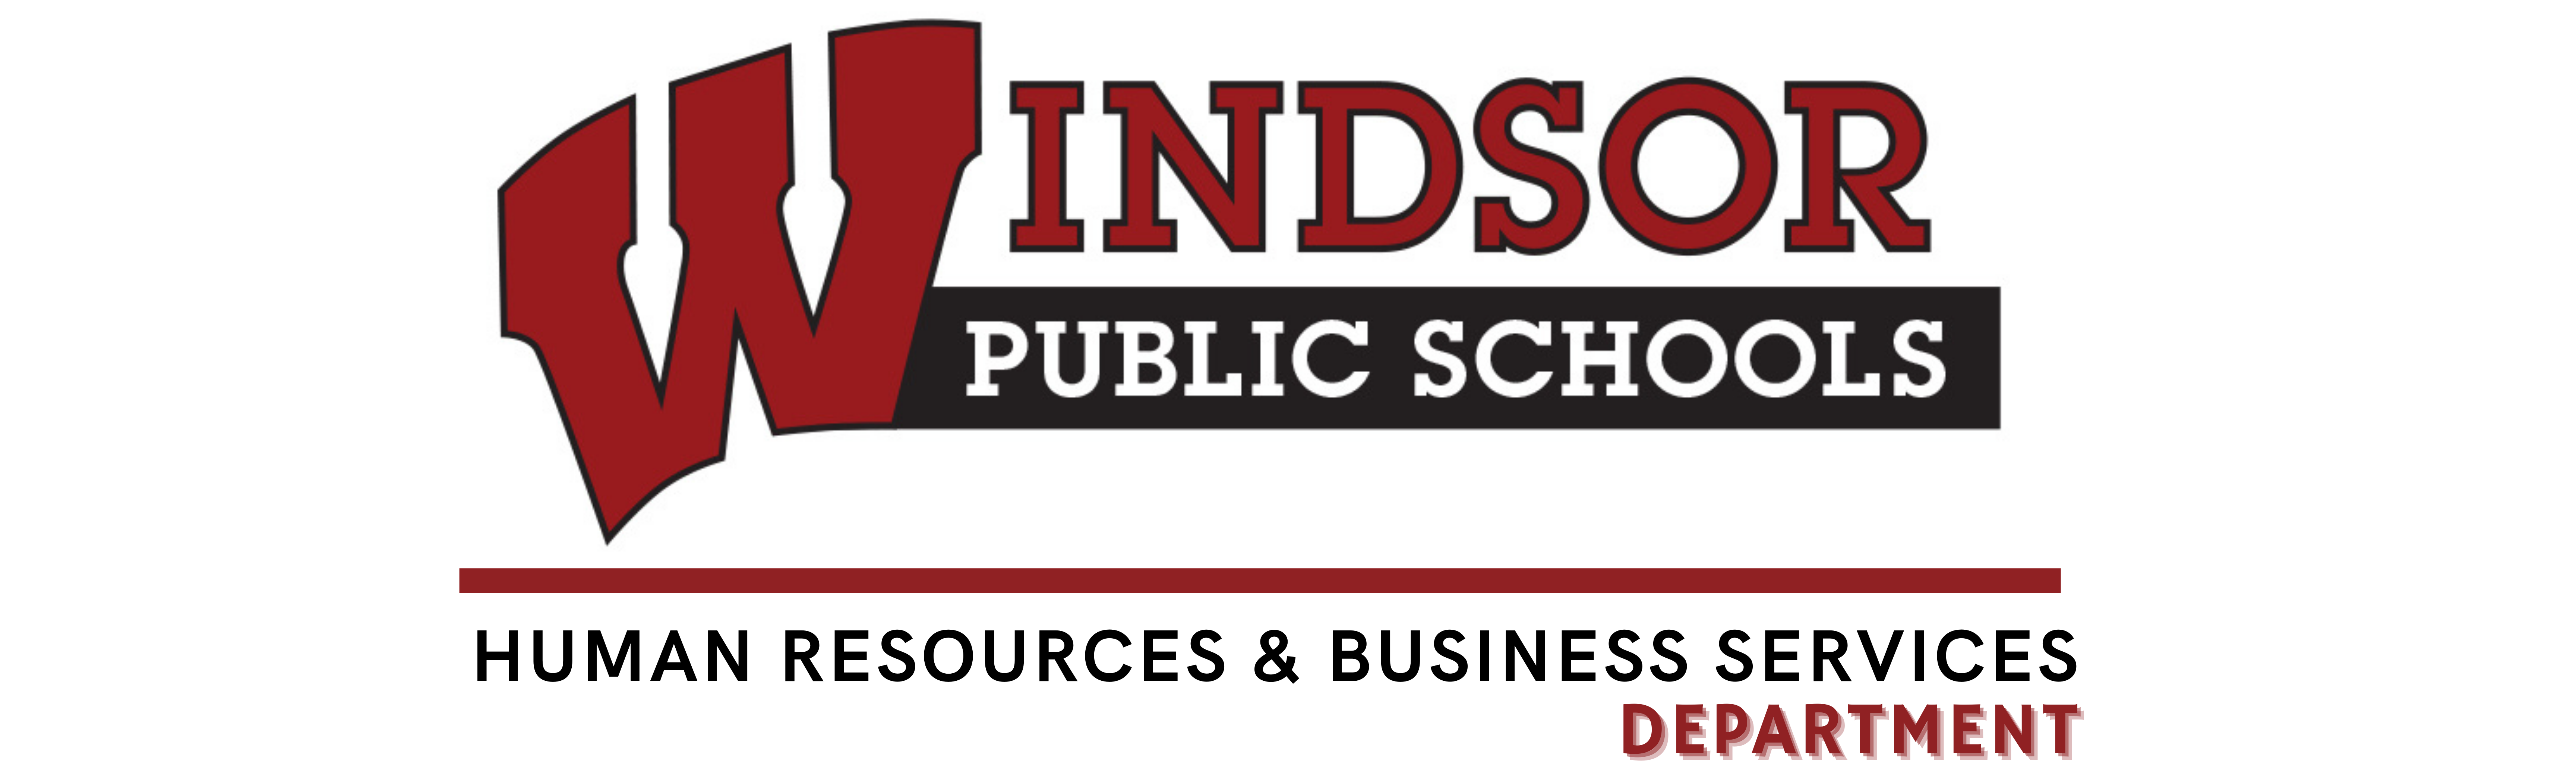 Windsor Public Schools Logo Human resources department